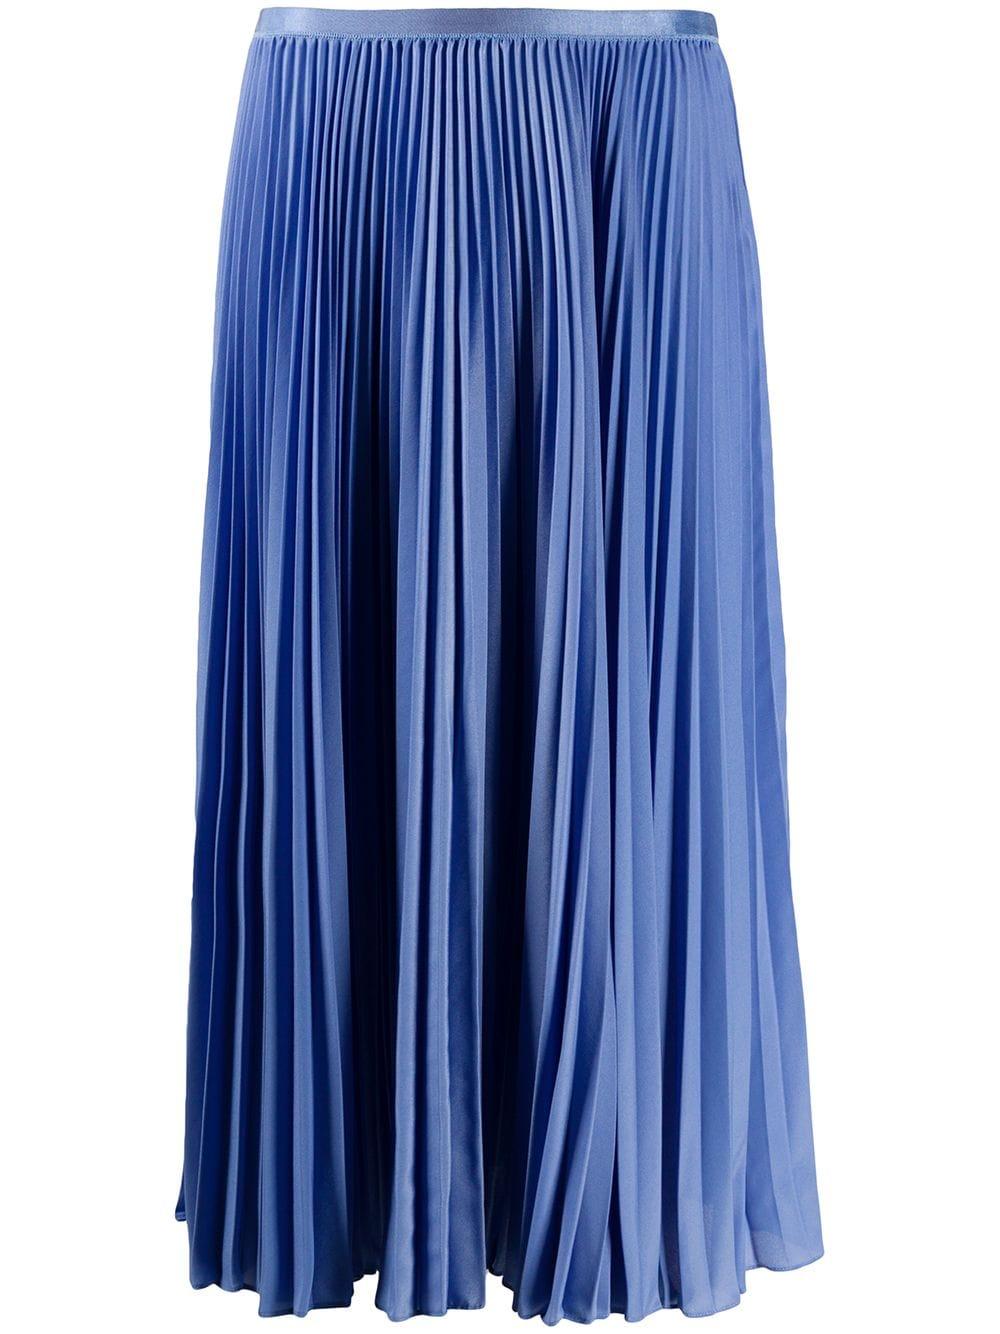 Polo Ralph Lauren Pleated Midi Skirt in Blue - Lyst